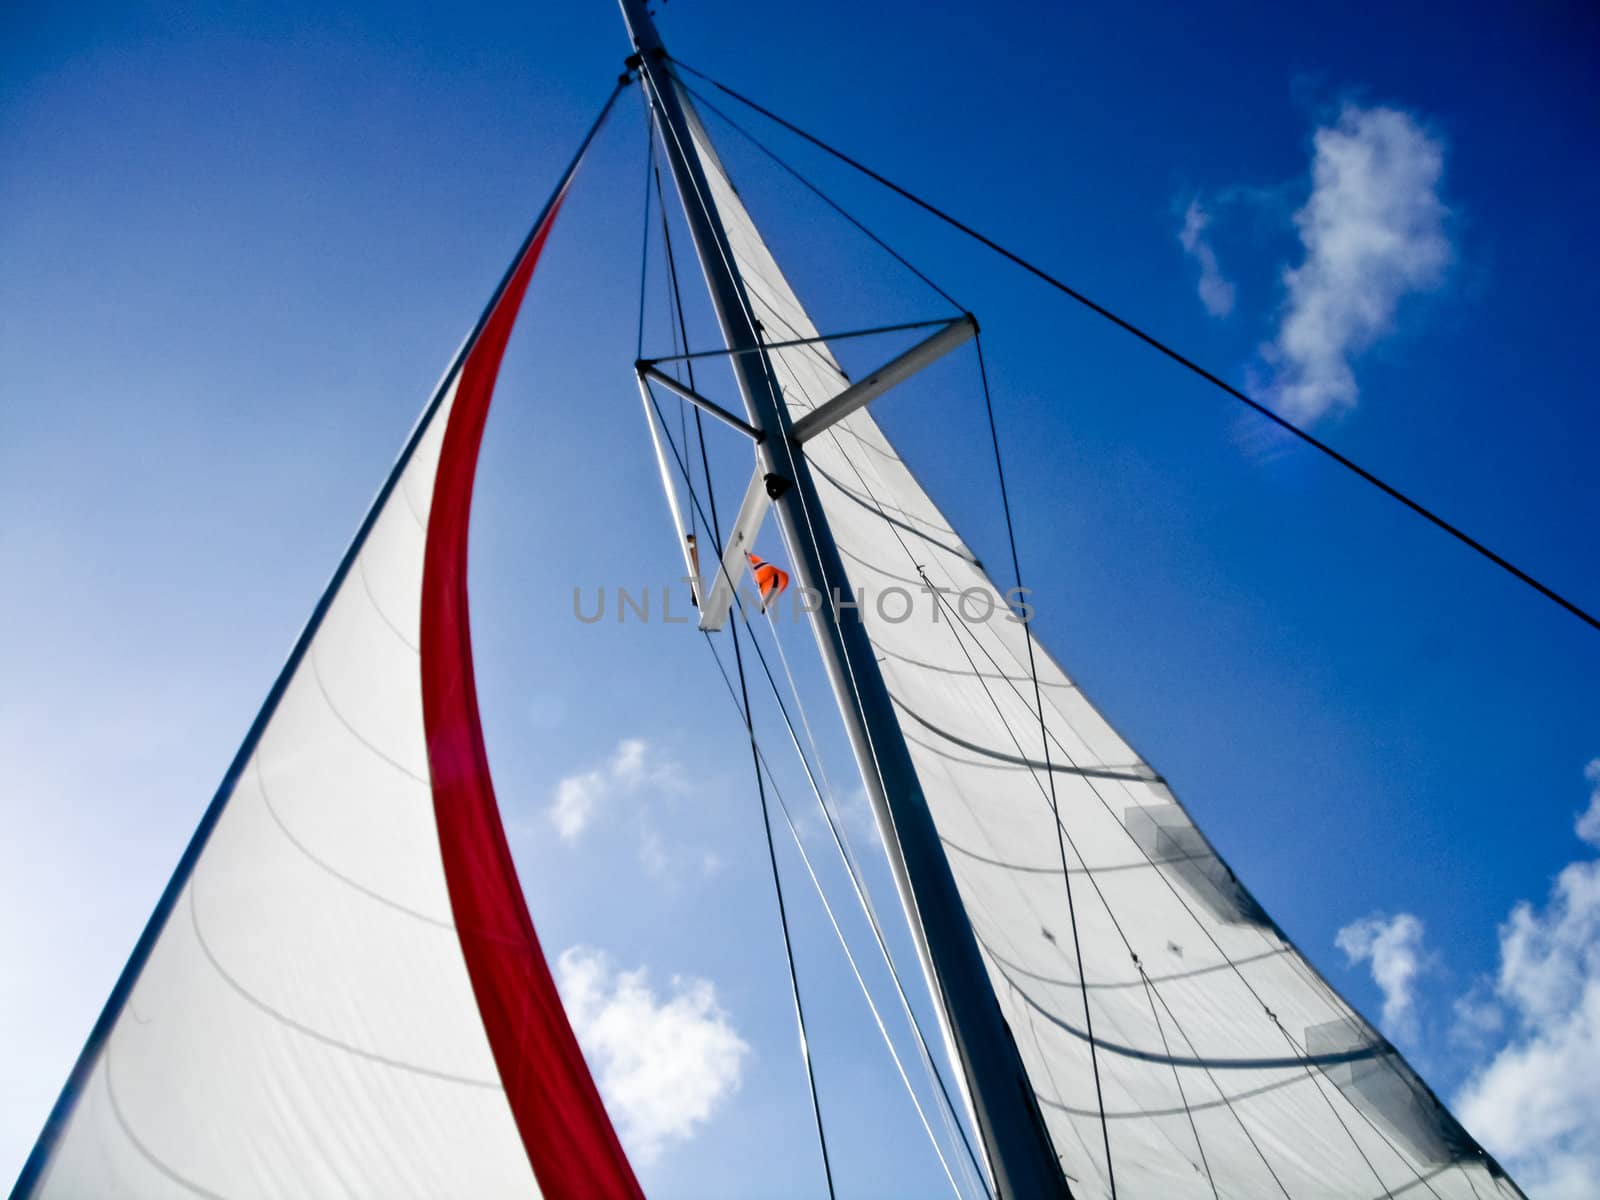 Set sails against a beautiful blue sky